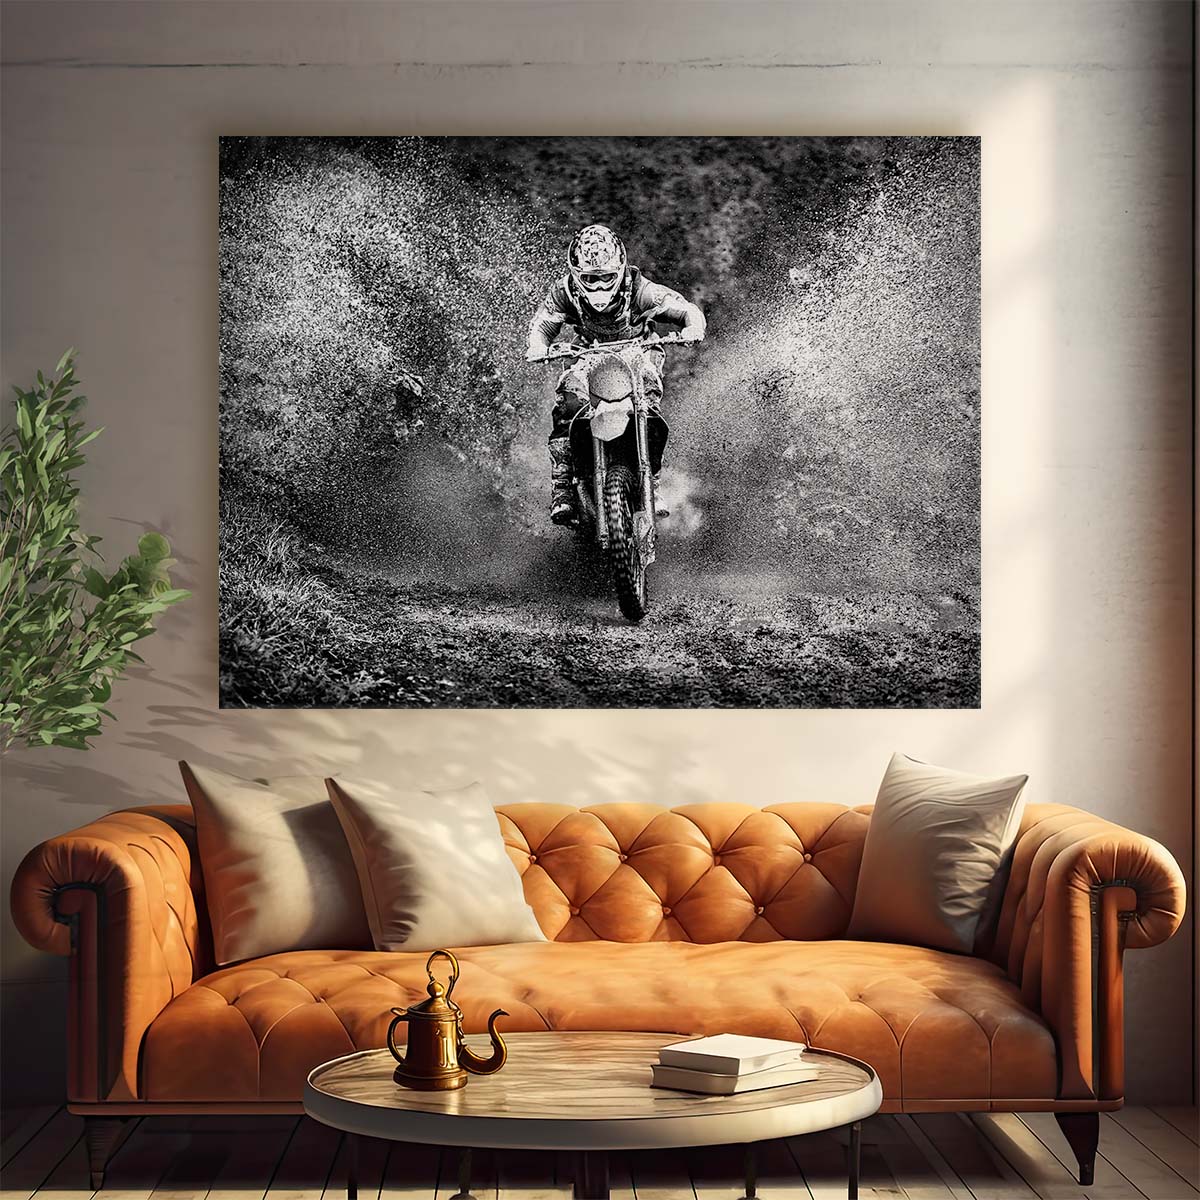 Extreme Motocross Racing Dramatic Monochrome Photography Wall Art